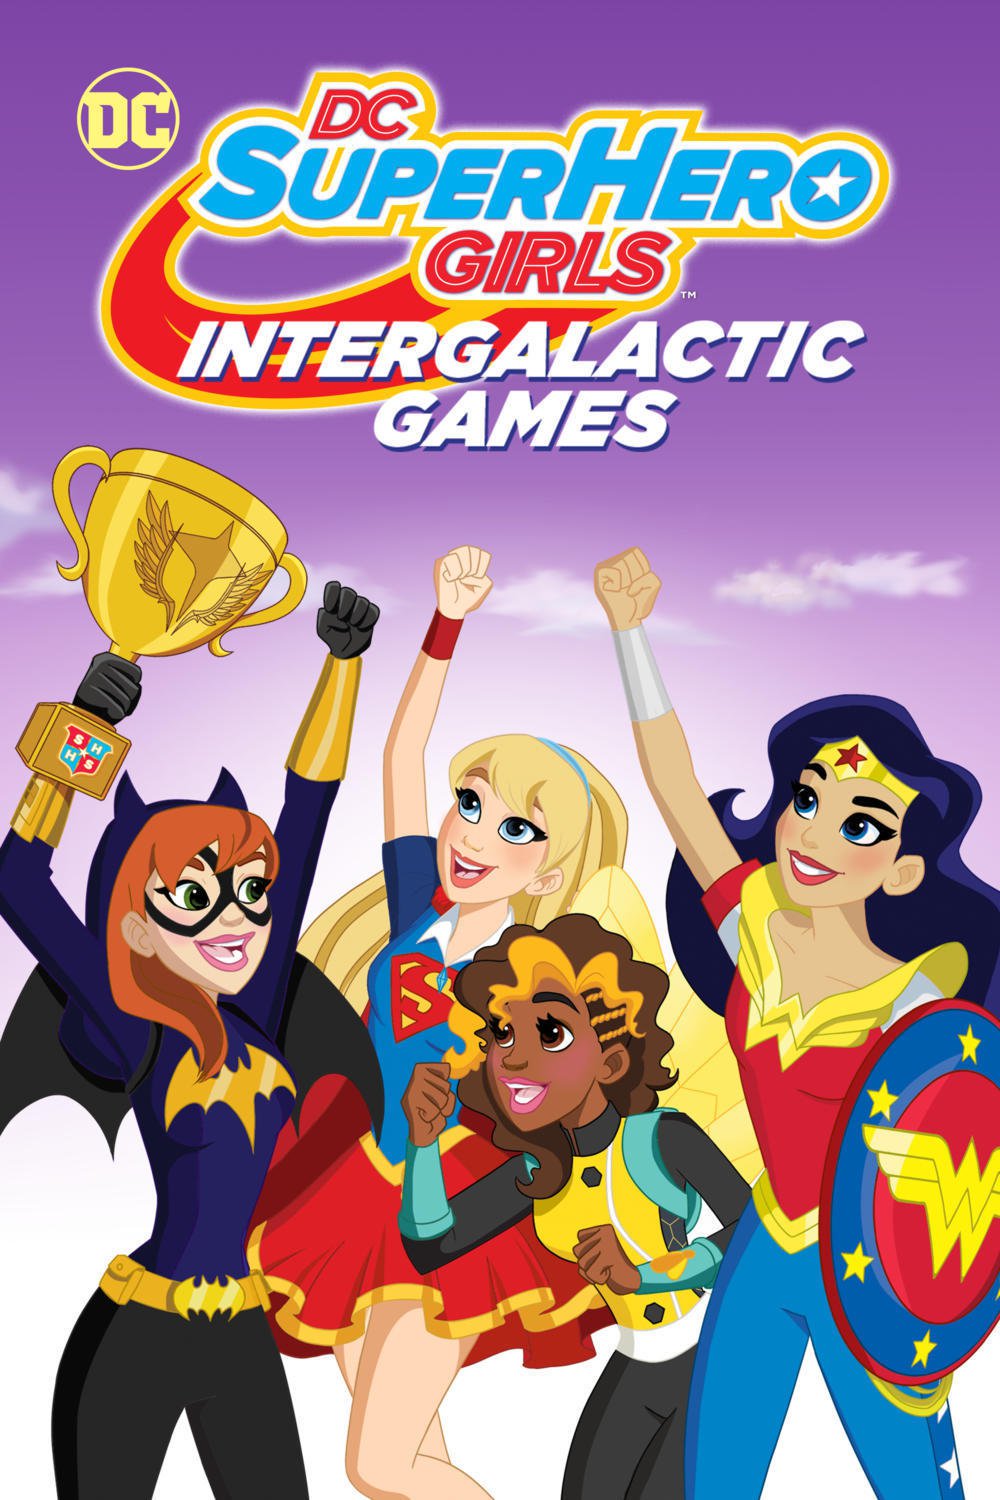 DC Super Hero Girls Intergalactic Games (2017) แก๊งคืสาว ดีซีซูเปอร์ฮีโร่ ศึกกีฬาแห่งจักรวาล Yvette Nicole Brown